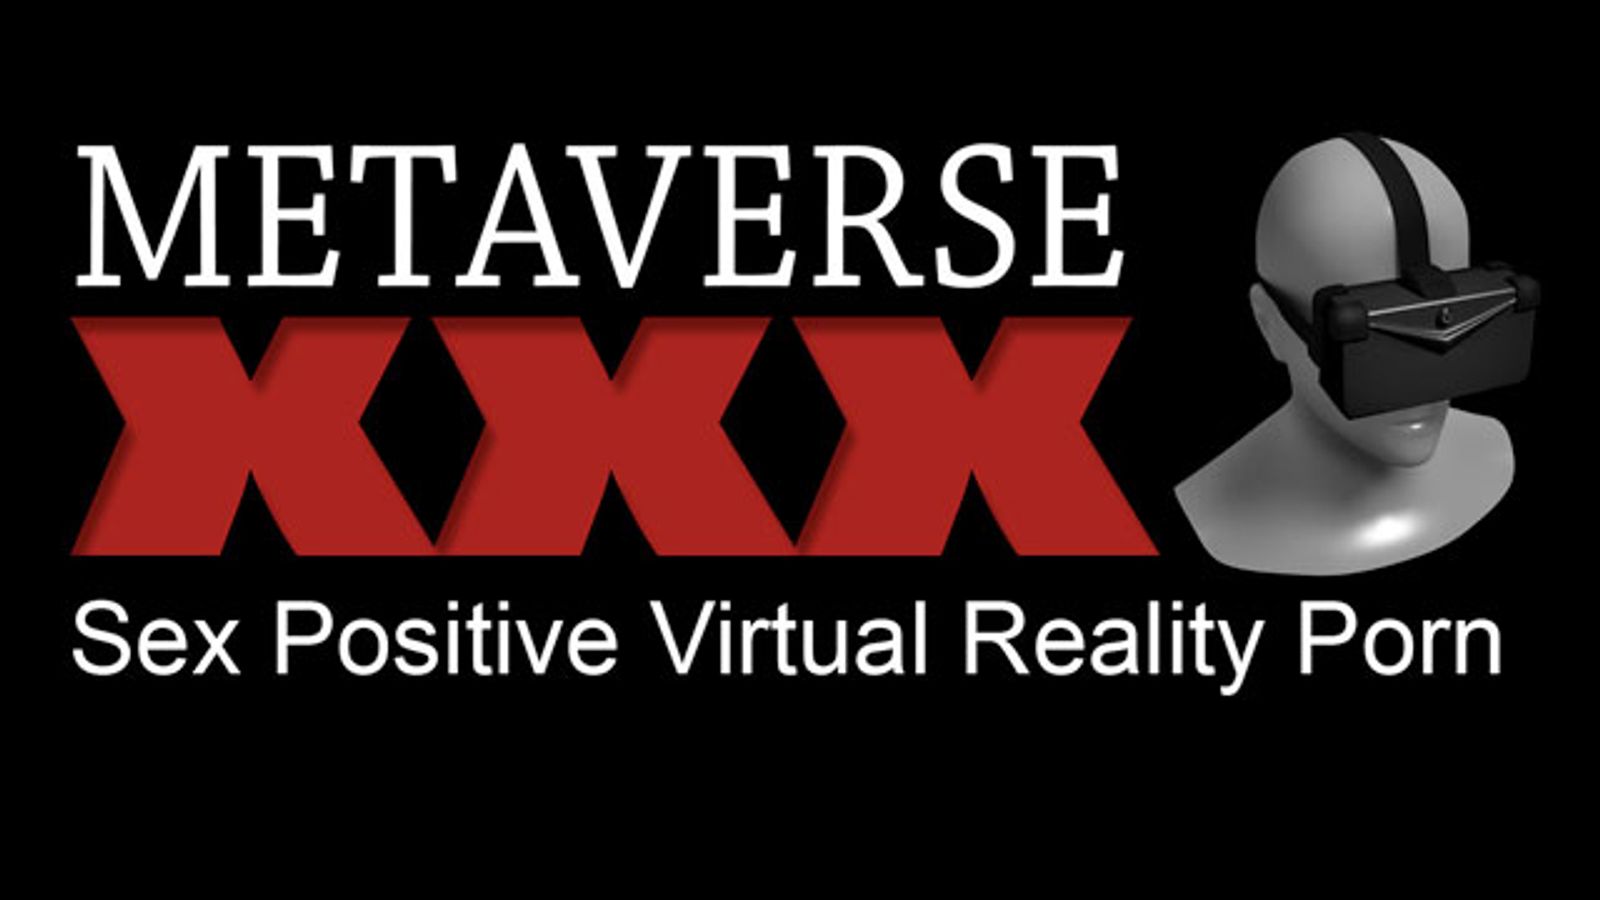 MetaverseXXX.com Launches with ‘Sex-Positive’ VR Porn